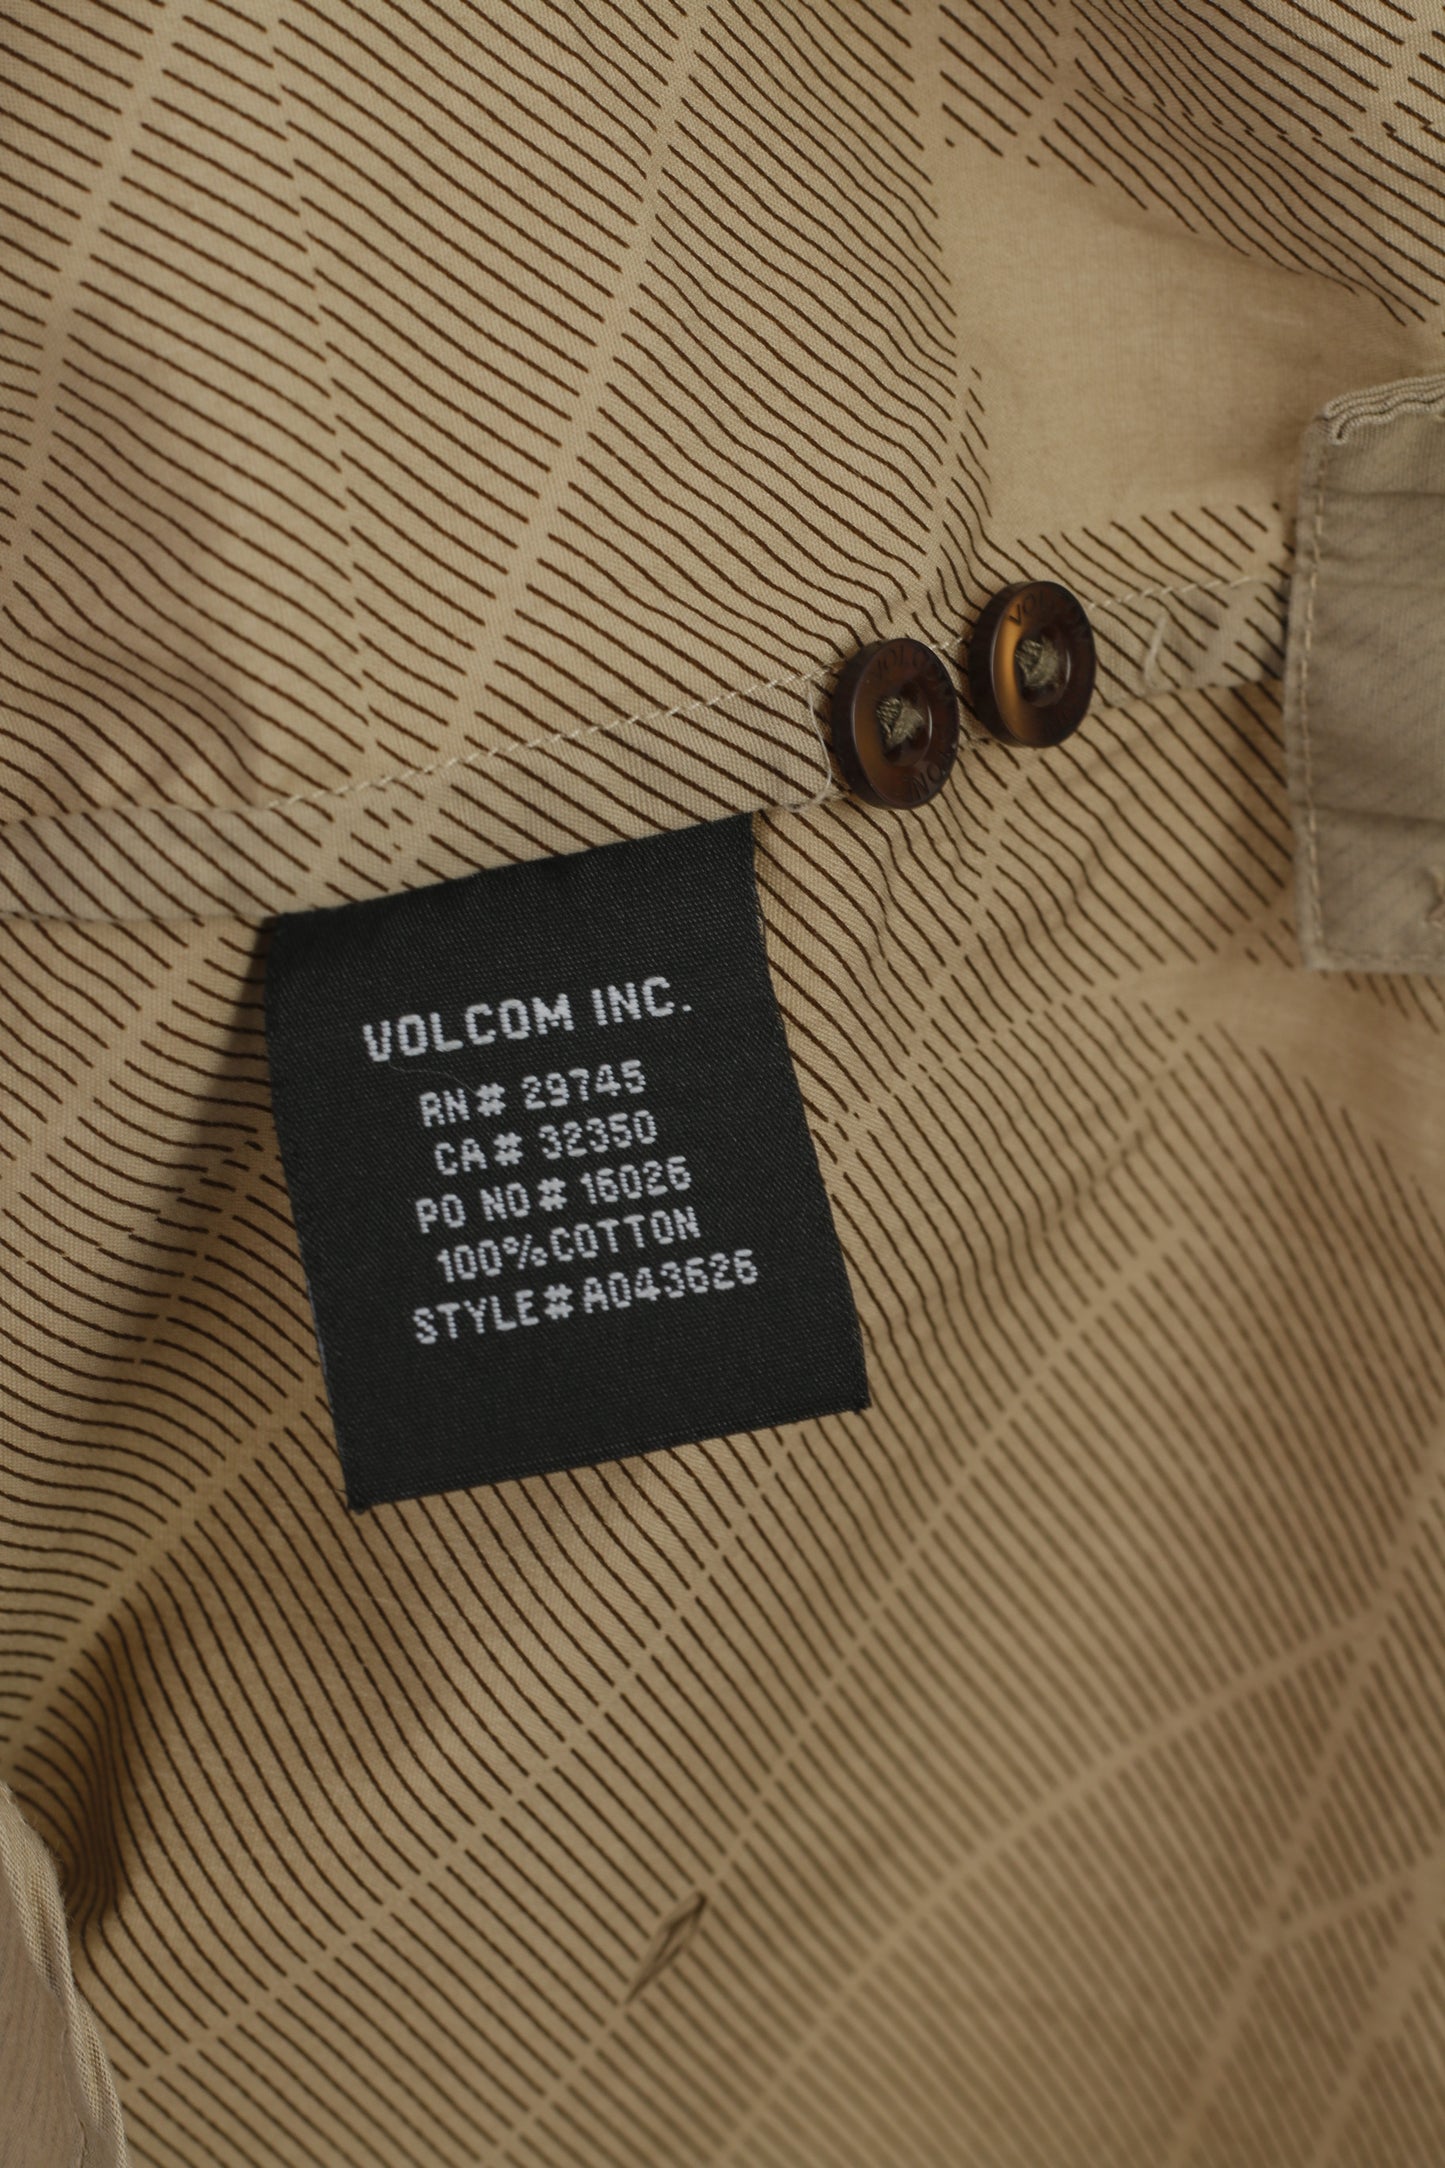 Volcom Men S Casual Shirt Beige Cotton Tailored Pocket Short Sleeve Outdoor Top